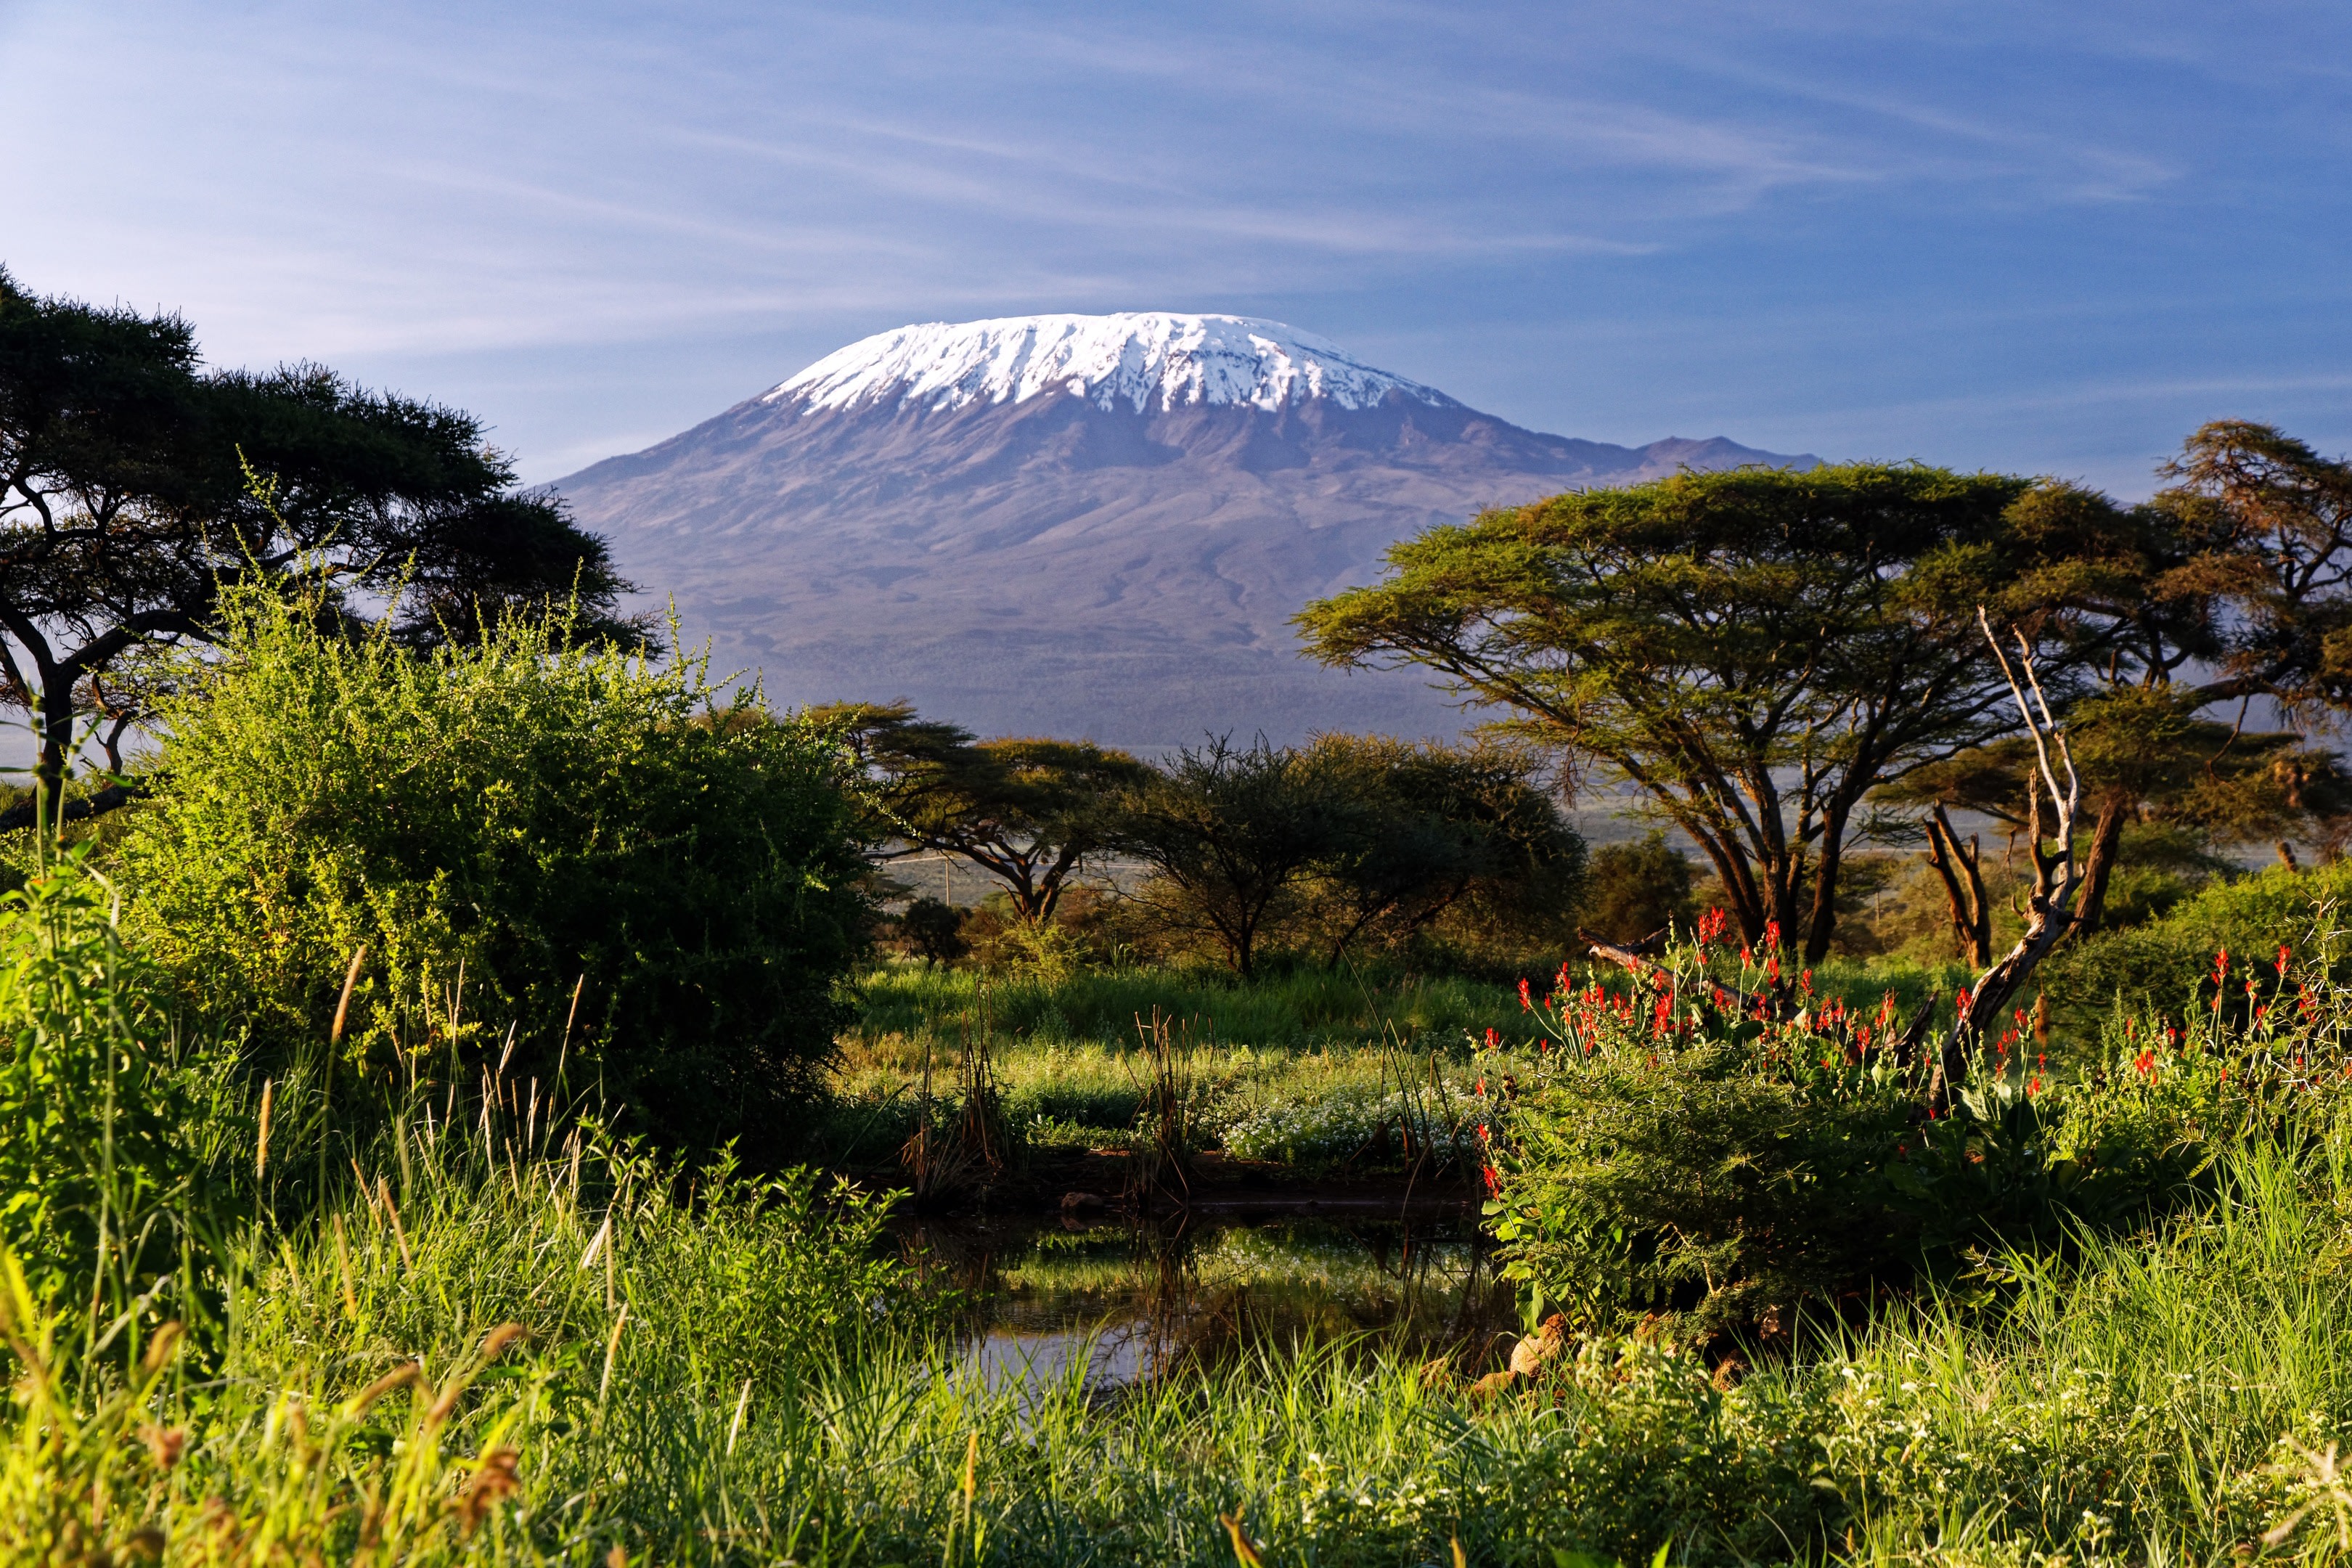 Kilimanjaro%20Nothern%20Circuit 1b937ba6 a547 4b0f a231 3be7efd9207c